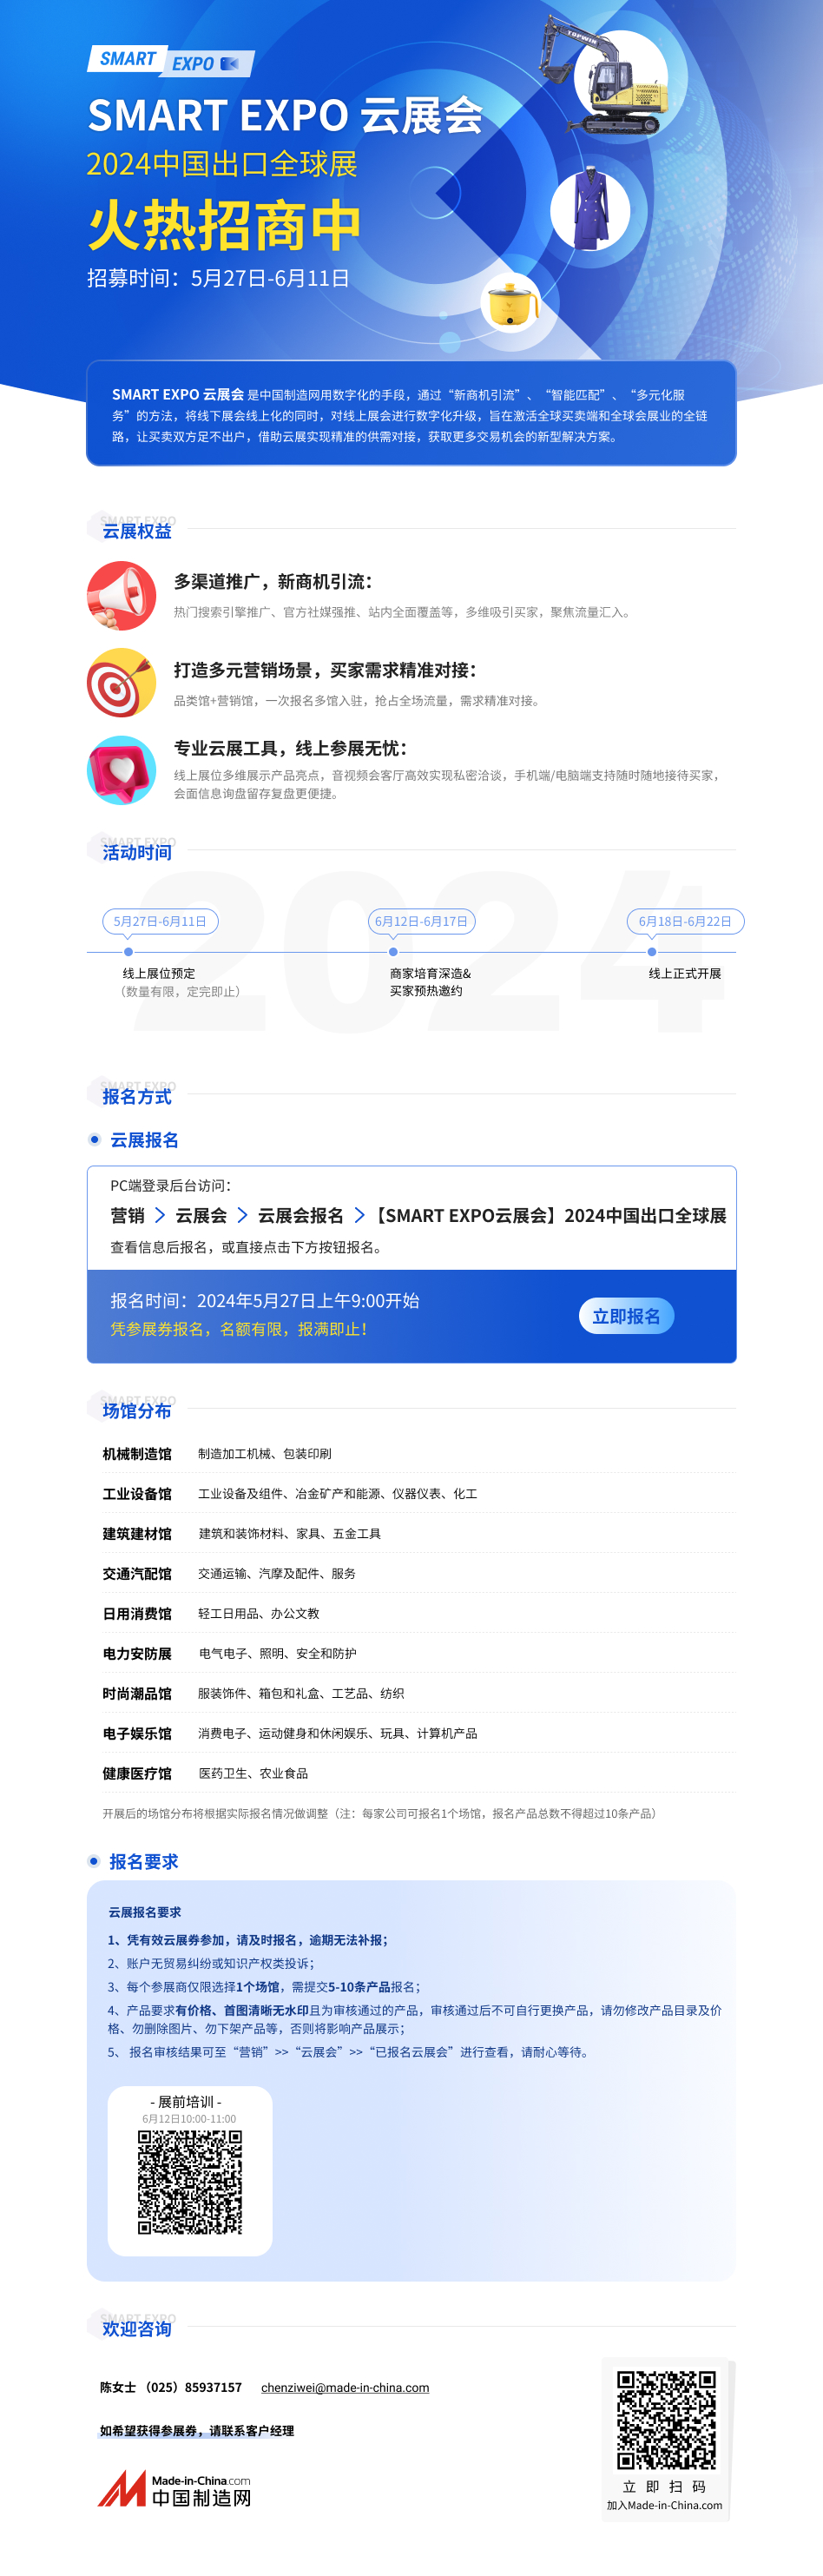 【SMART EXPO 云展会】2024中国出口全球展，云展位招募中！